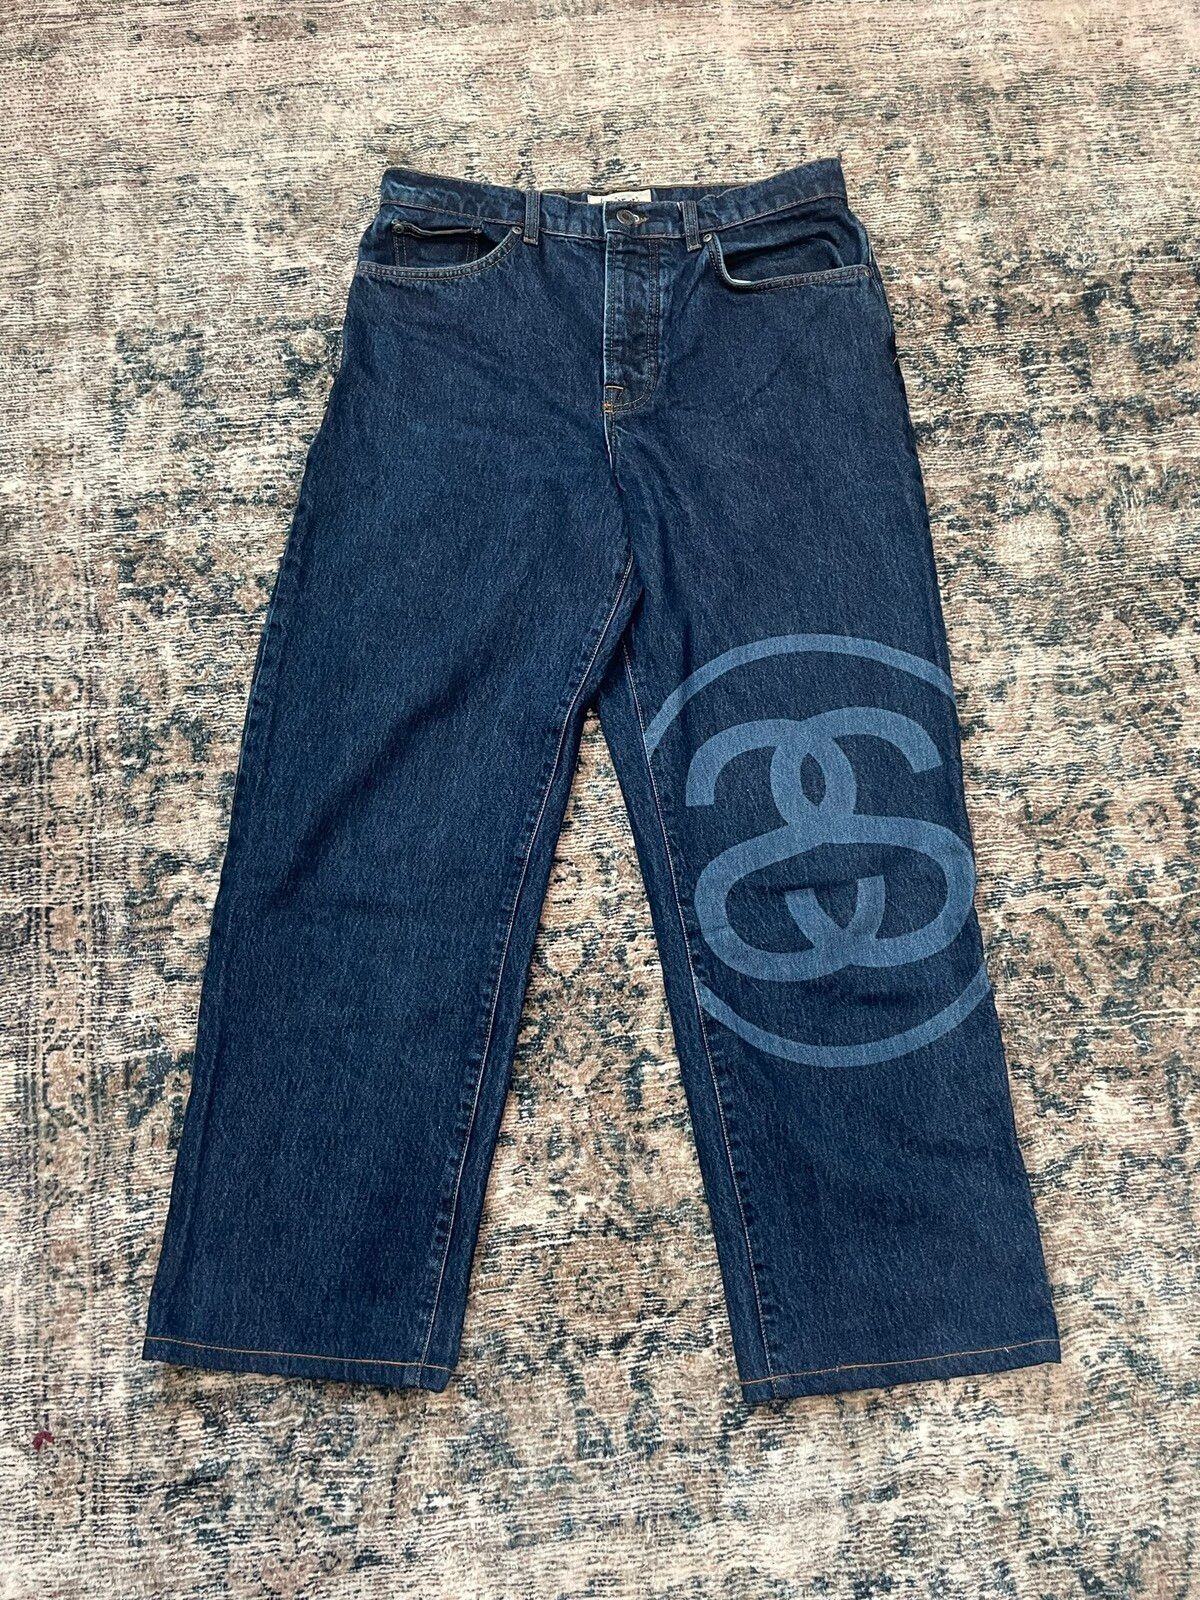 Stussy STUSSY SS-Link Big Ol' Jeans | Grailed